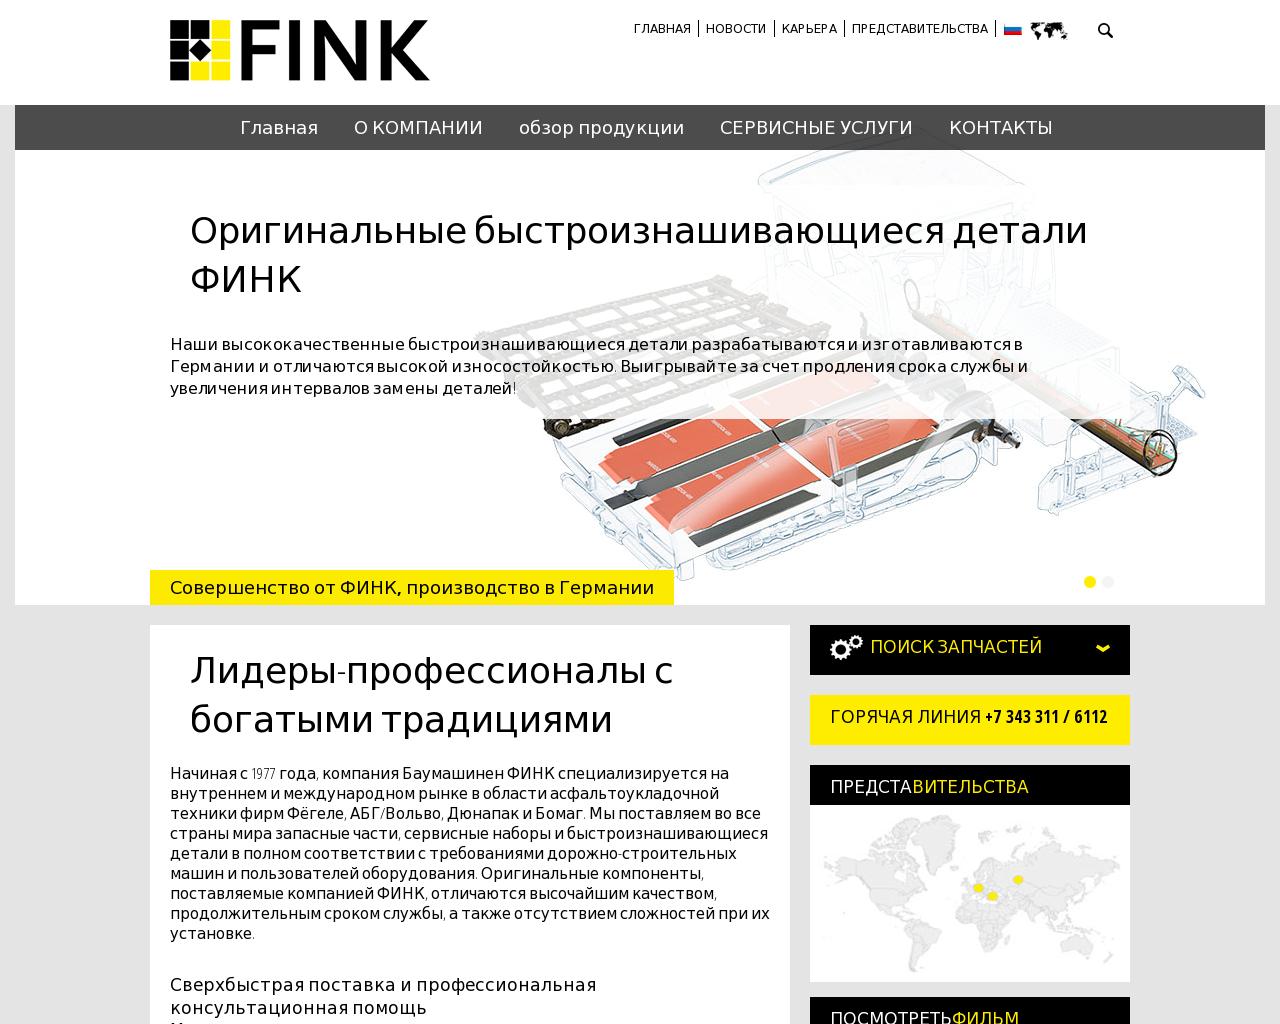 Изображение сайта fink-russia.ru в разрешении 1280x1024